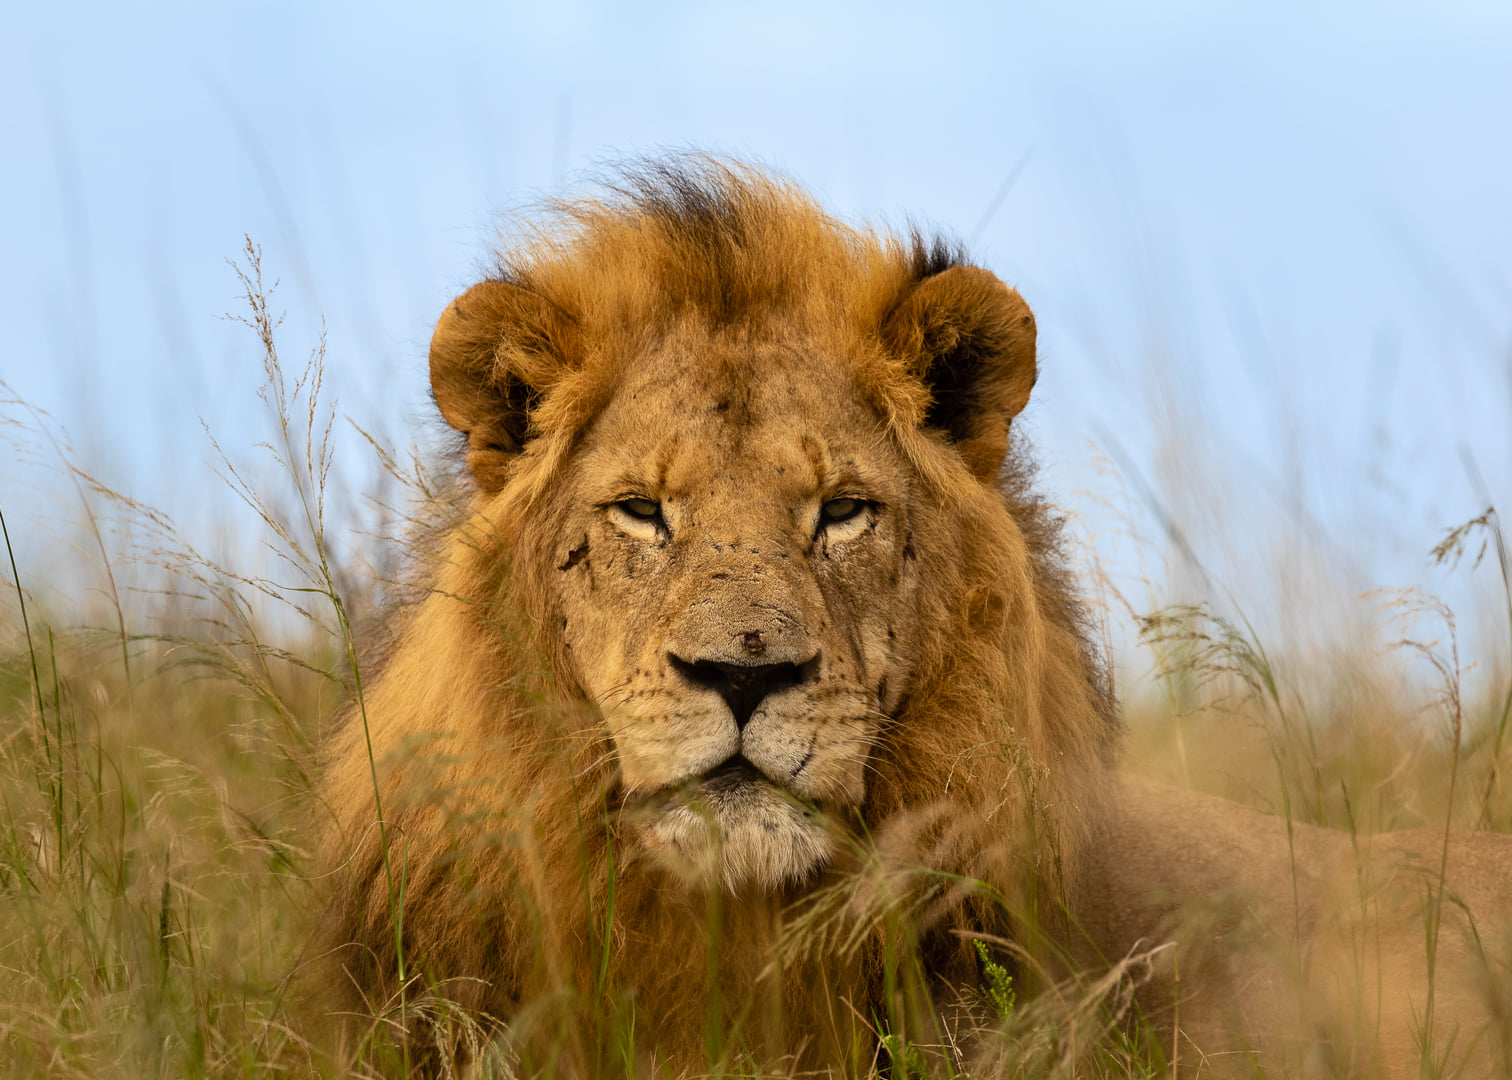 Lion 2021 Facebook Wildlife Photo Competition Finalist